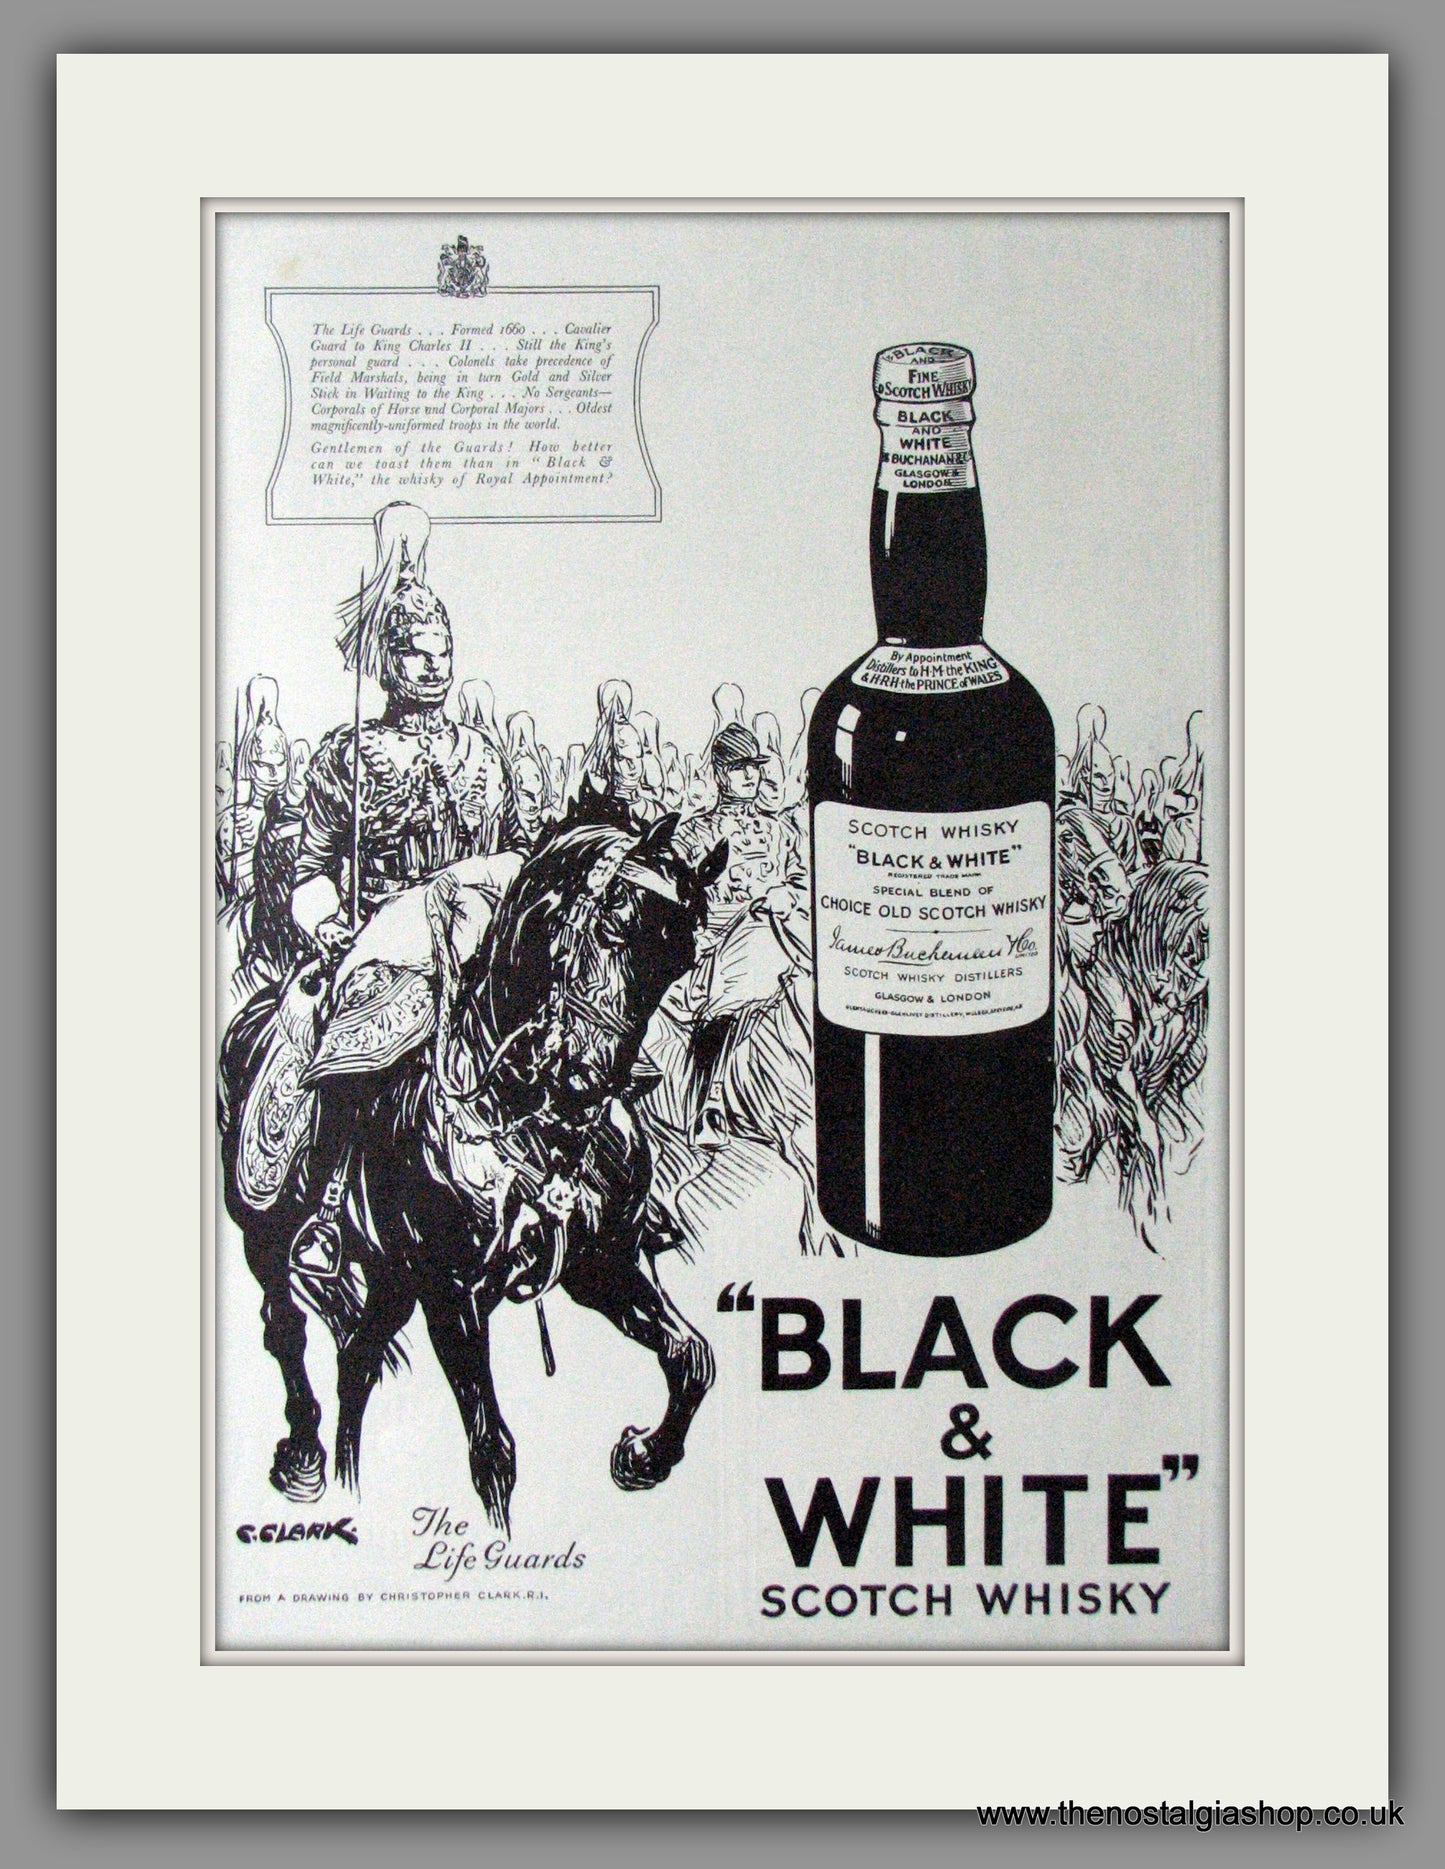 Black & White Scotch Whisky. Original Advert 1937 (ref AD11425)